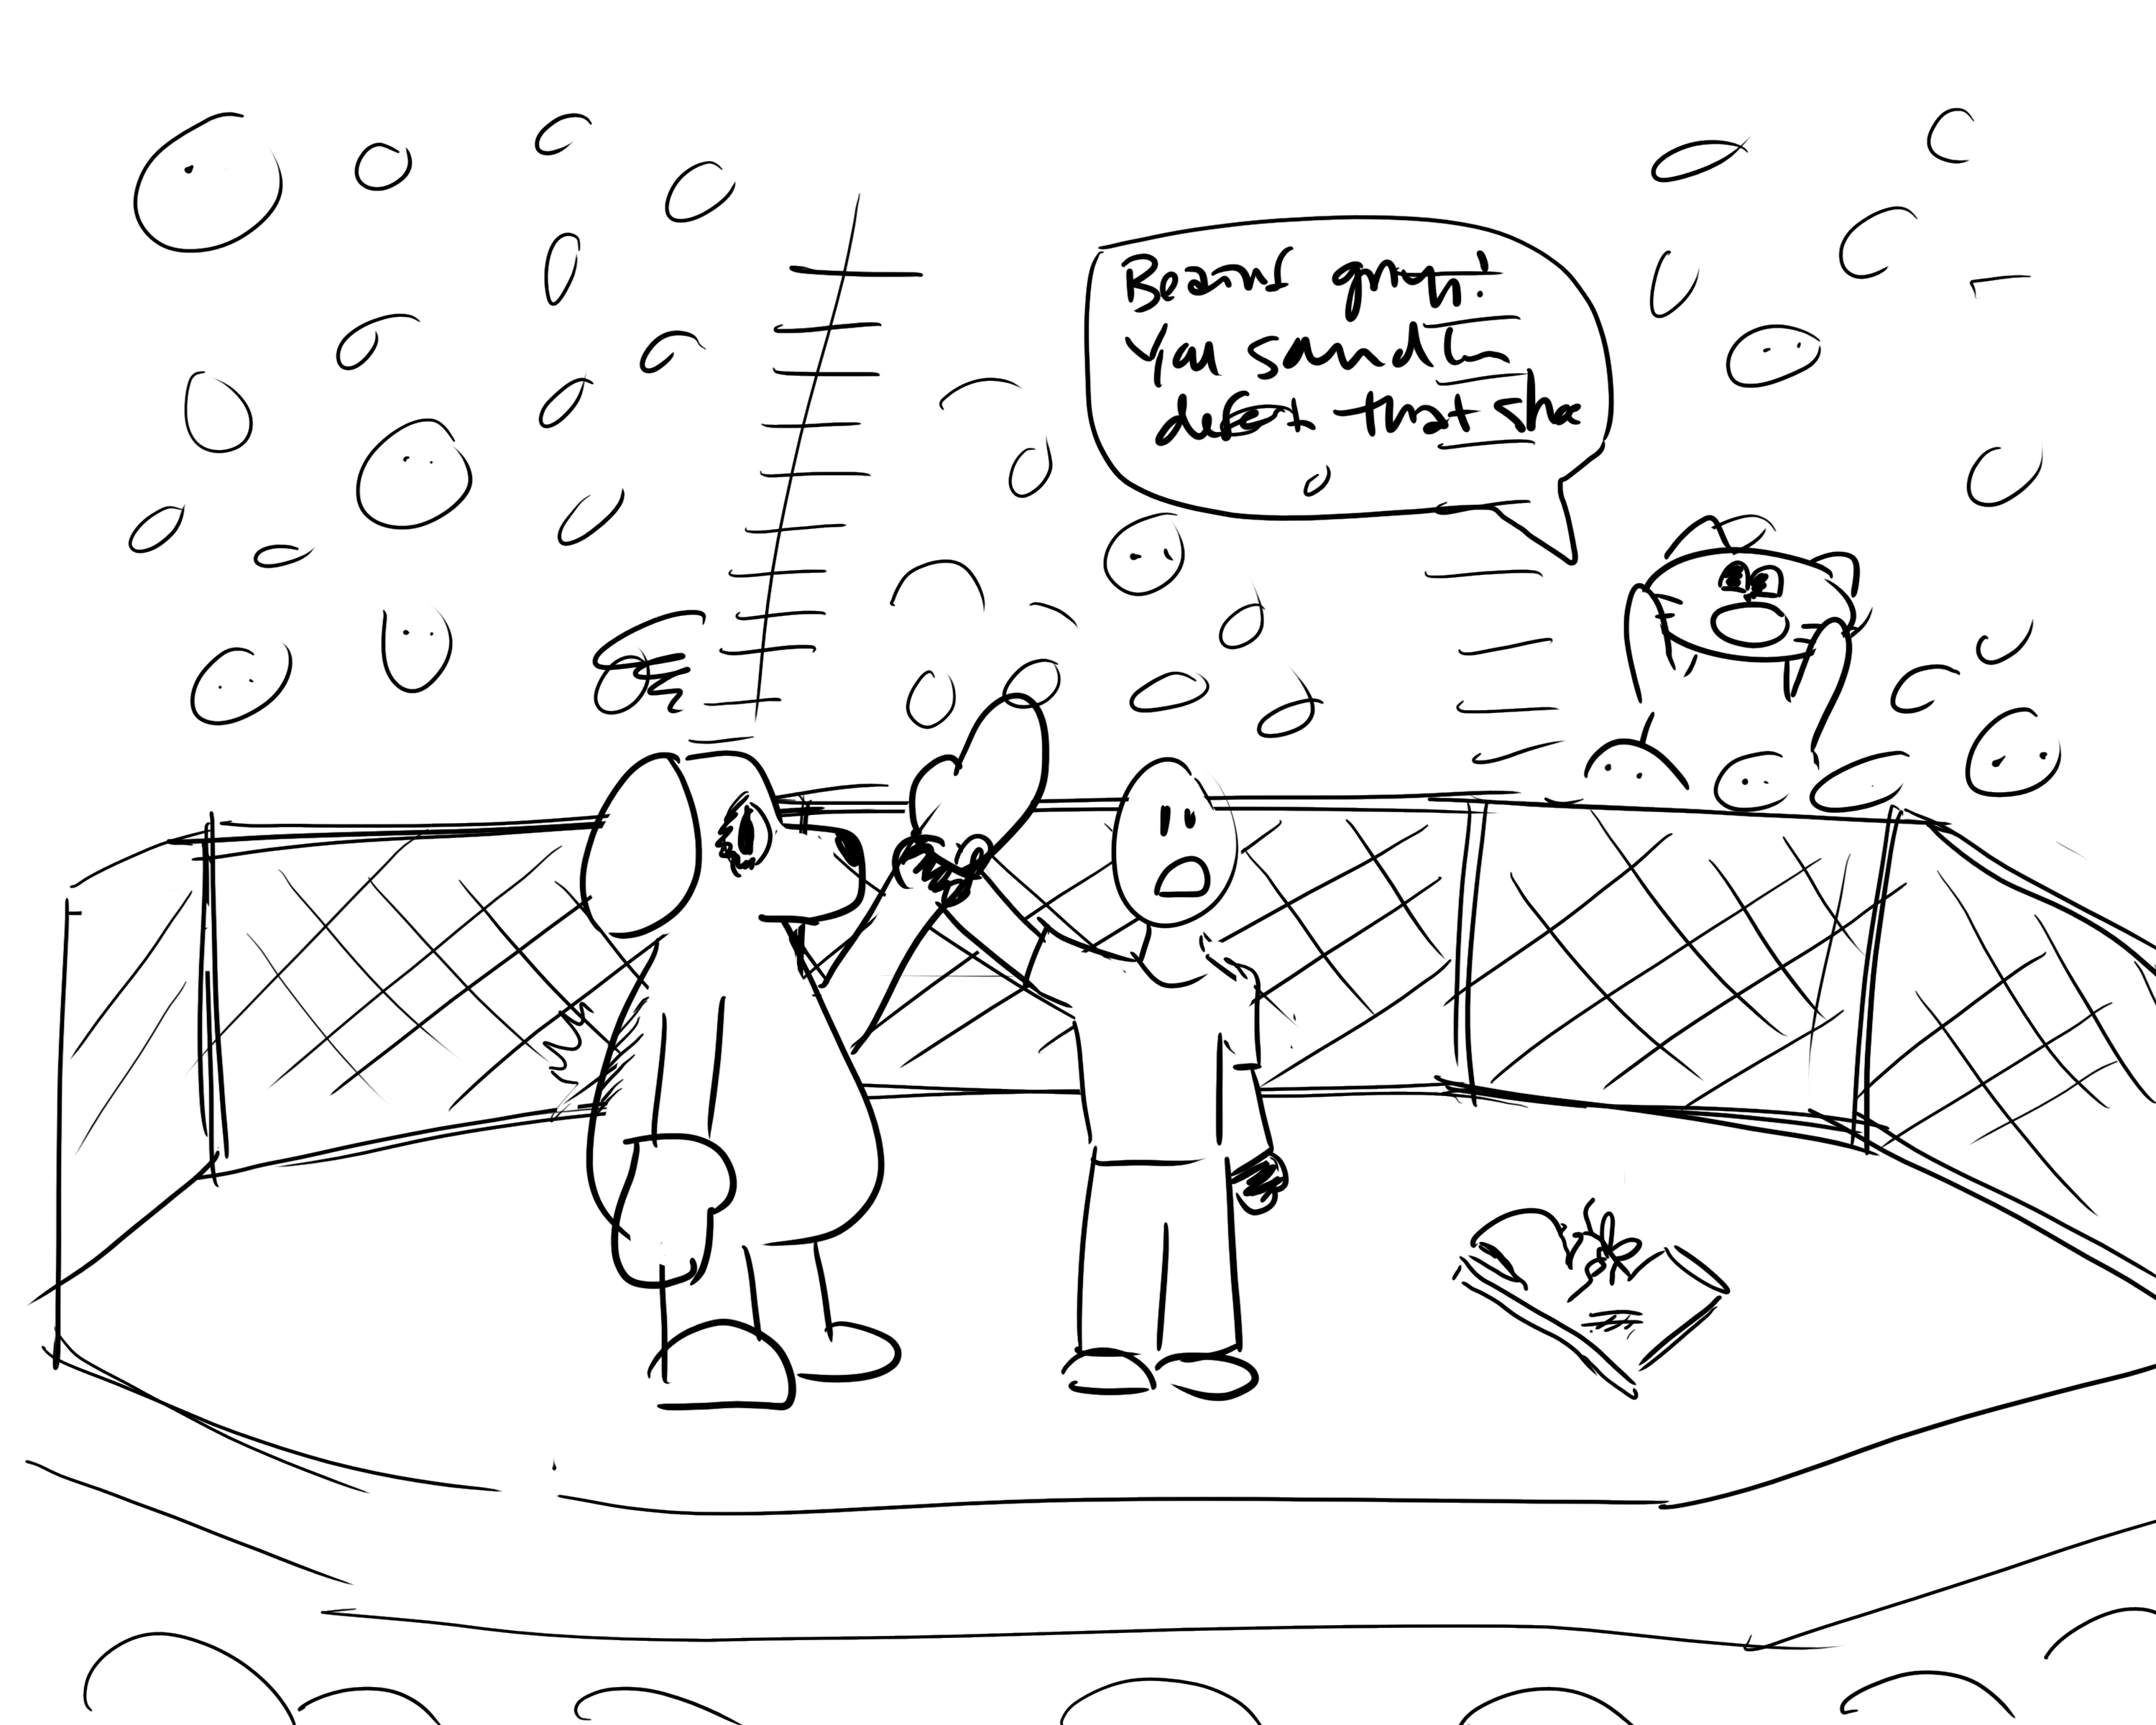 Sketch of MMA cartoon